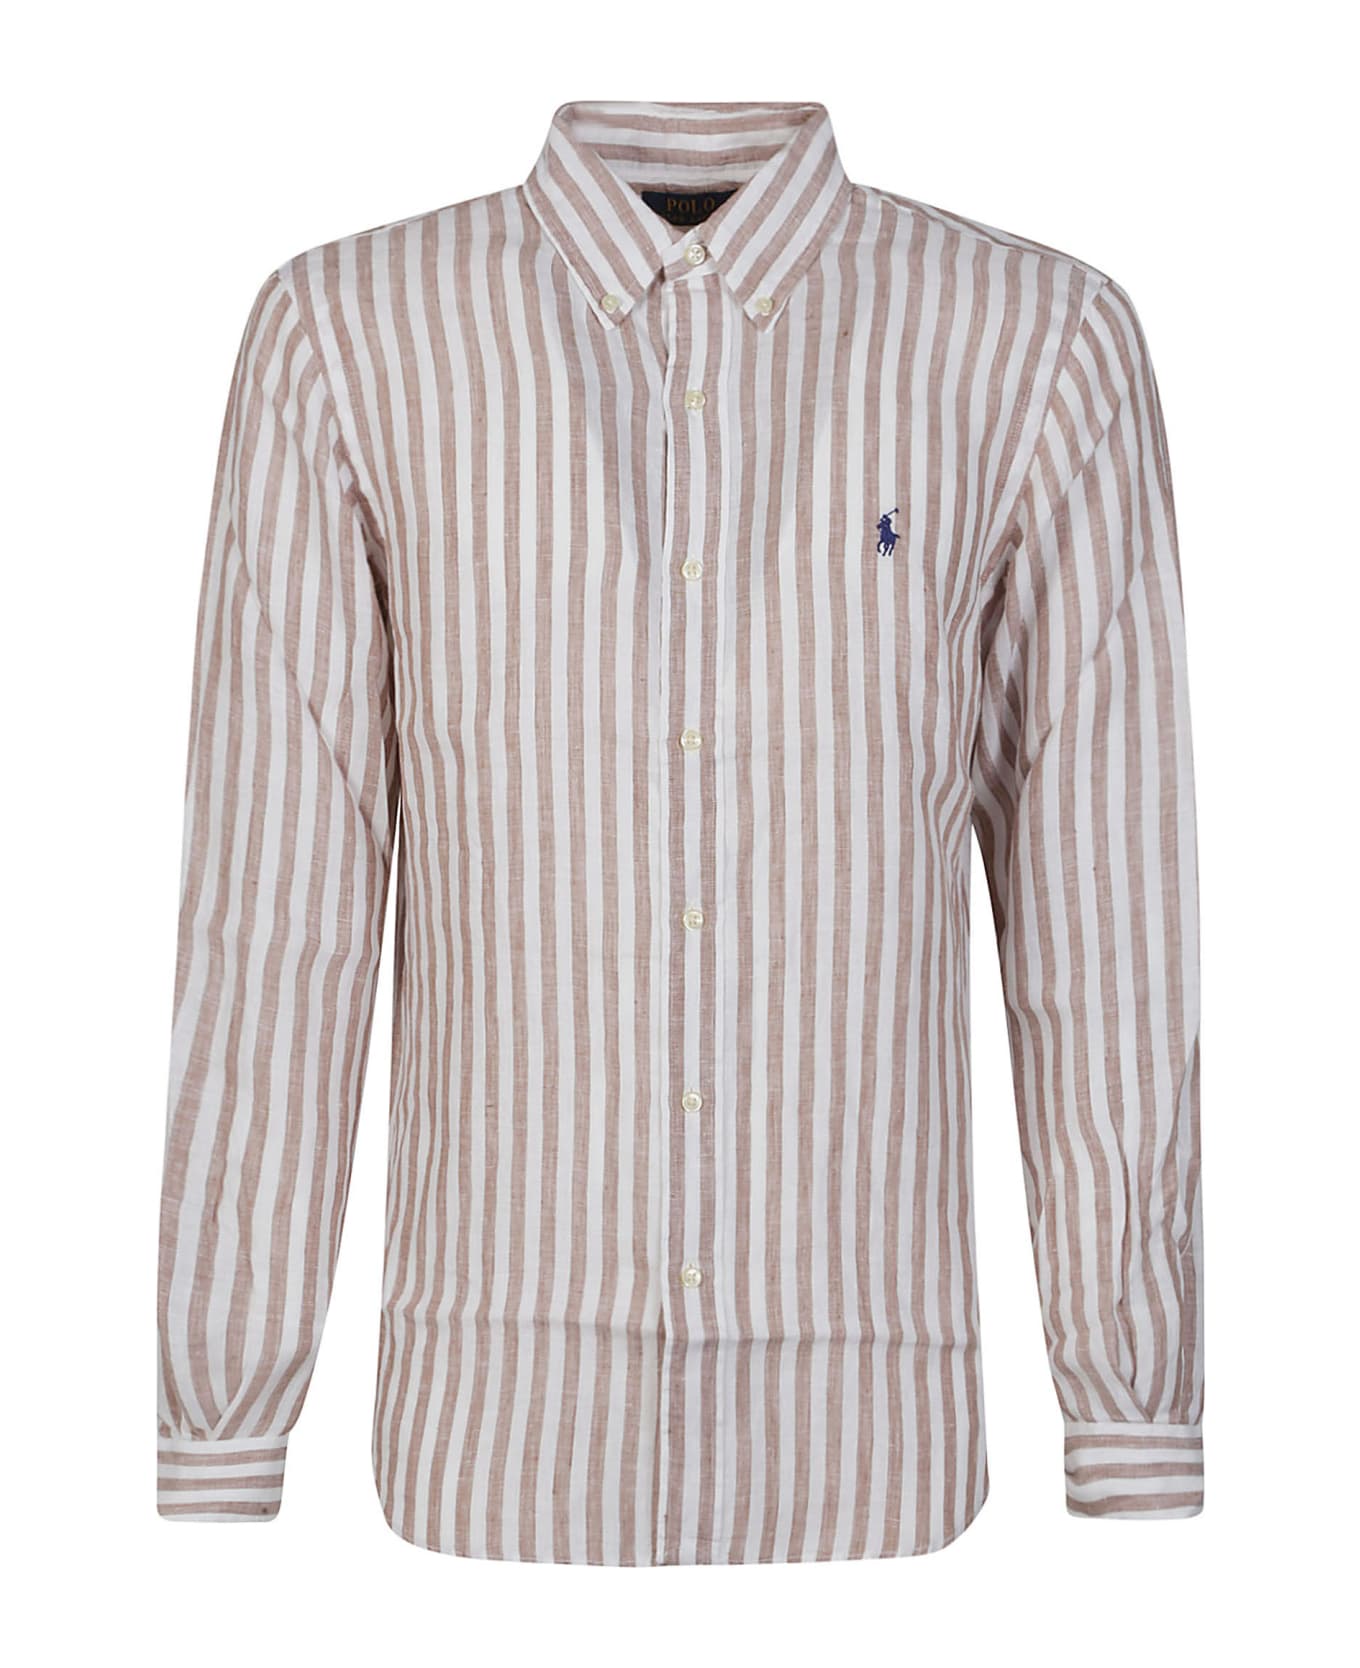 Polo Ralph Lauren Long Sleeve Shirt - Khaki/white シャツ